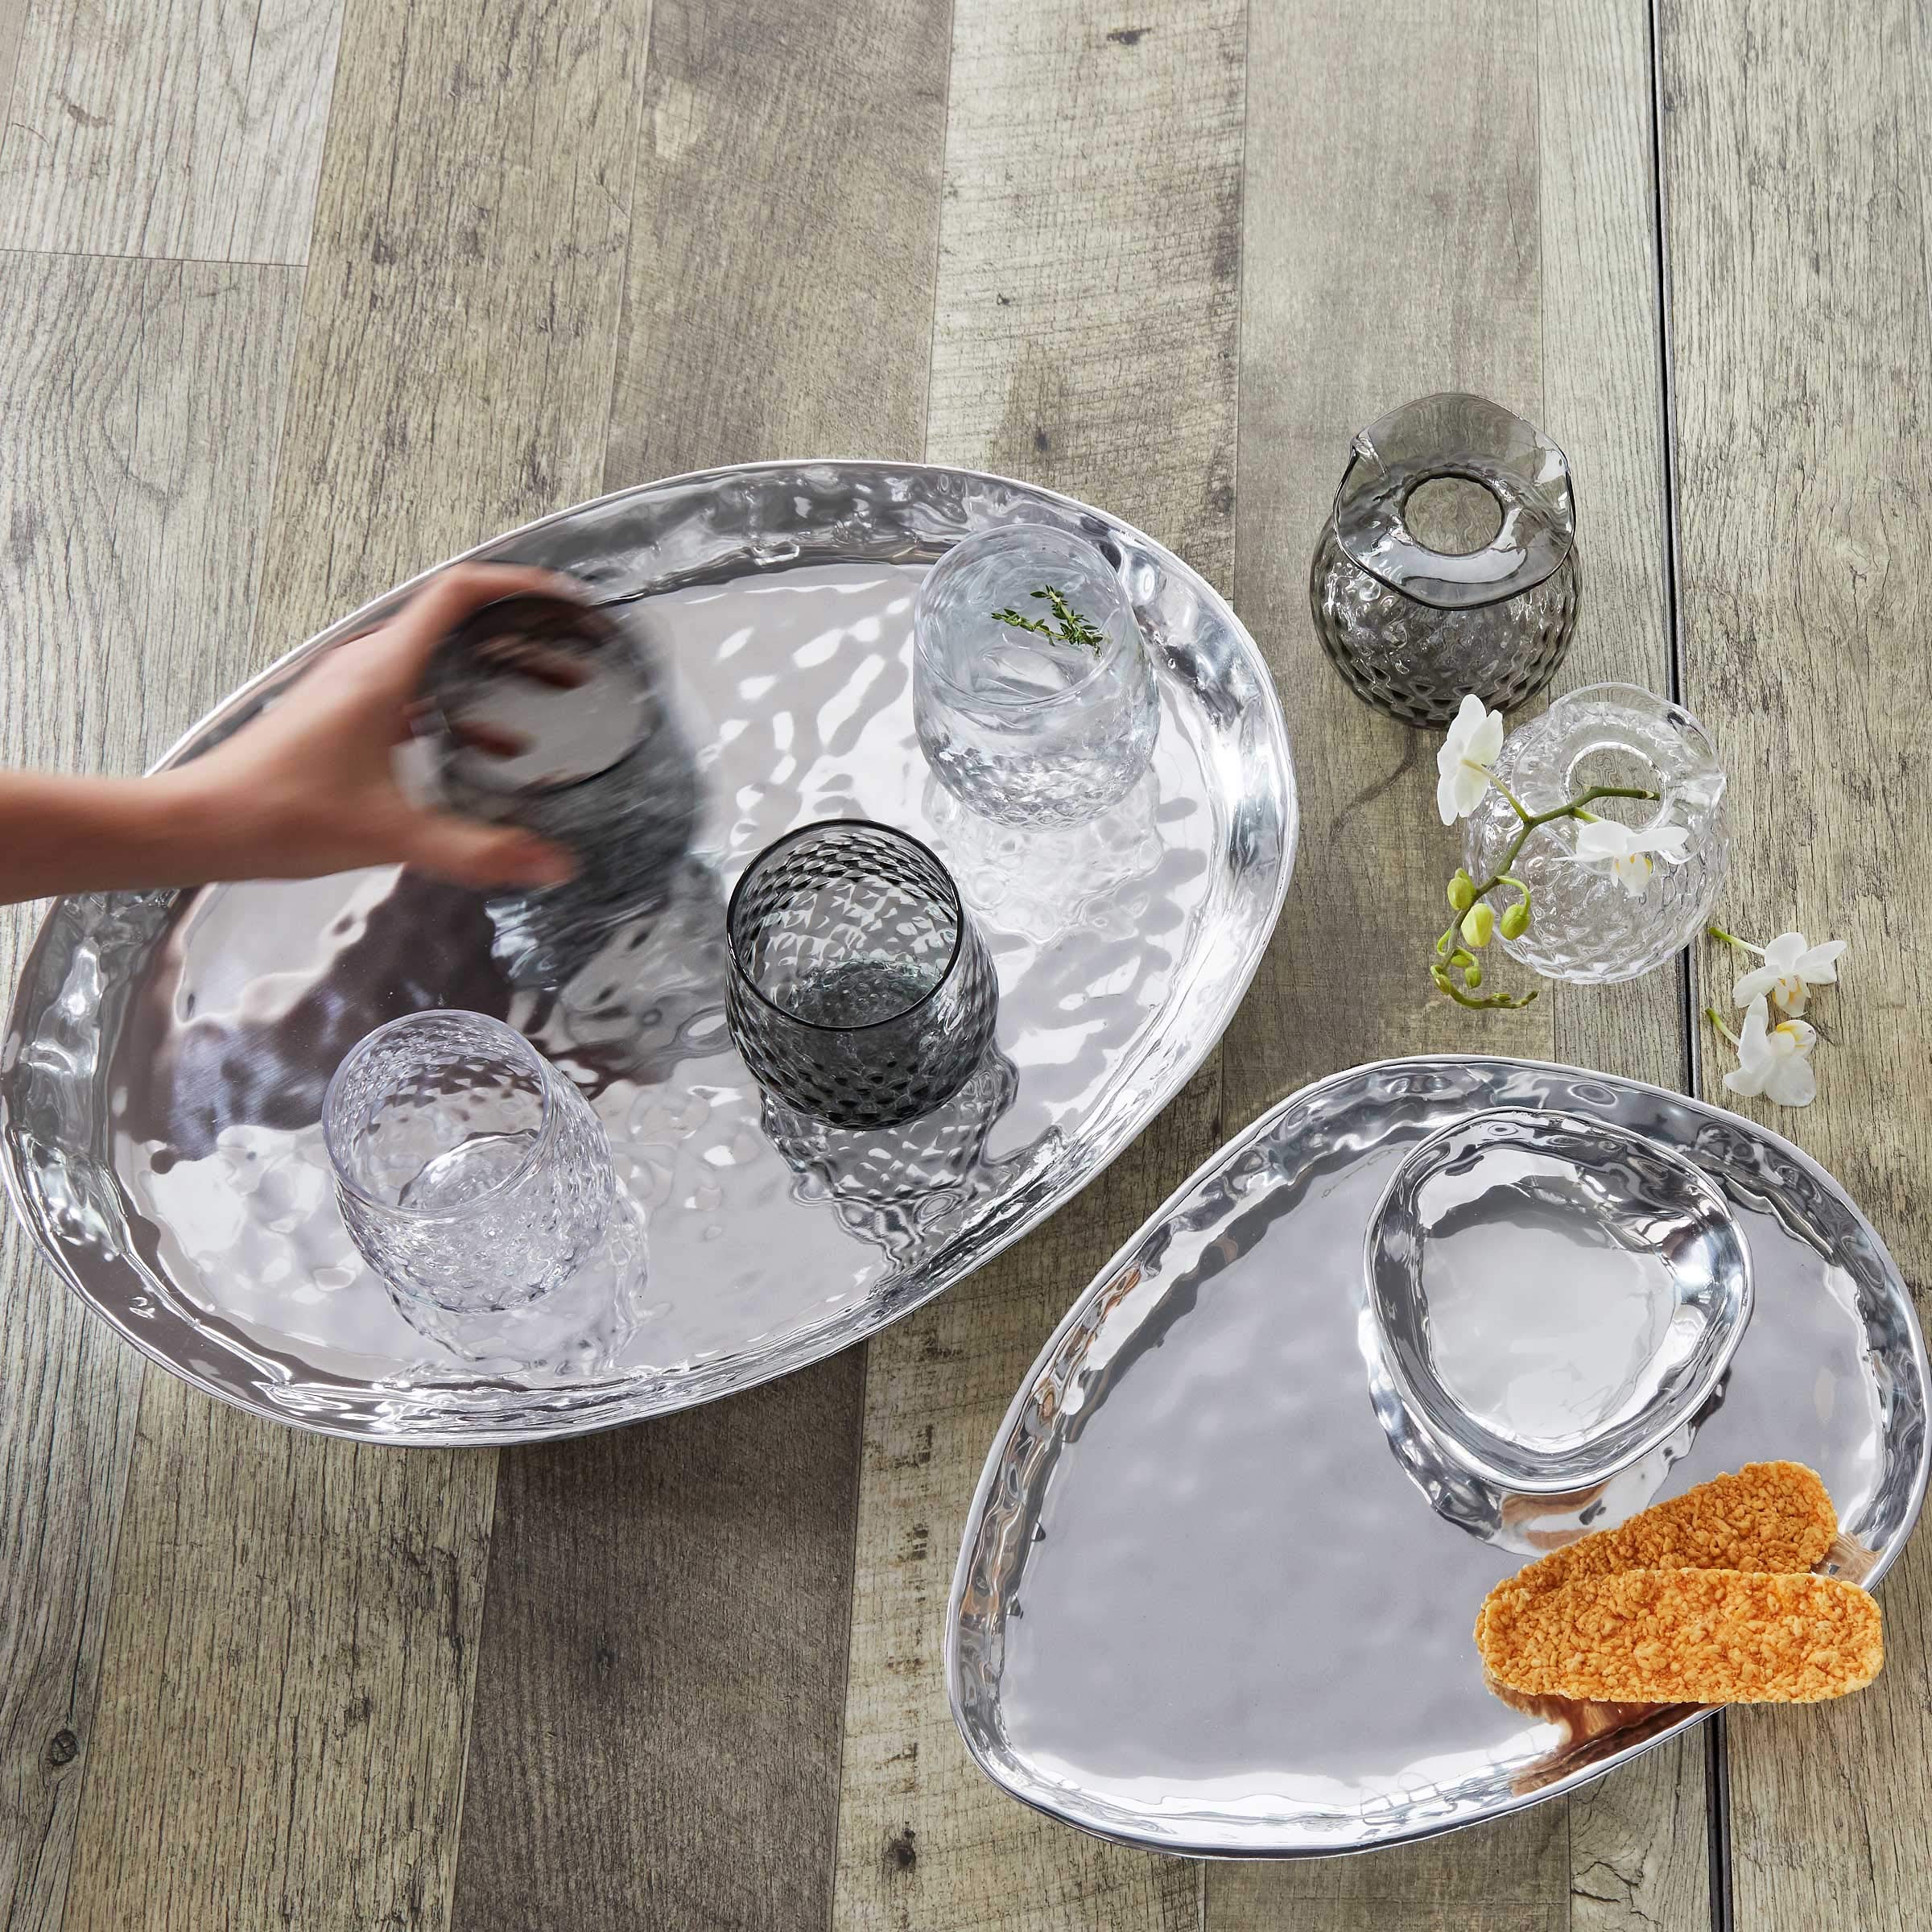 Mariposa, Bowls & Platters Dinnerware & Serveware, Large Oval Tray, Shimmer Silver